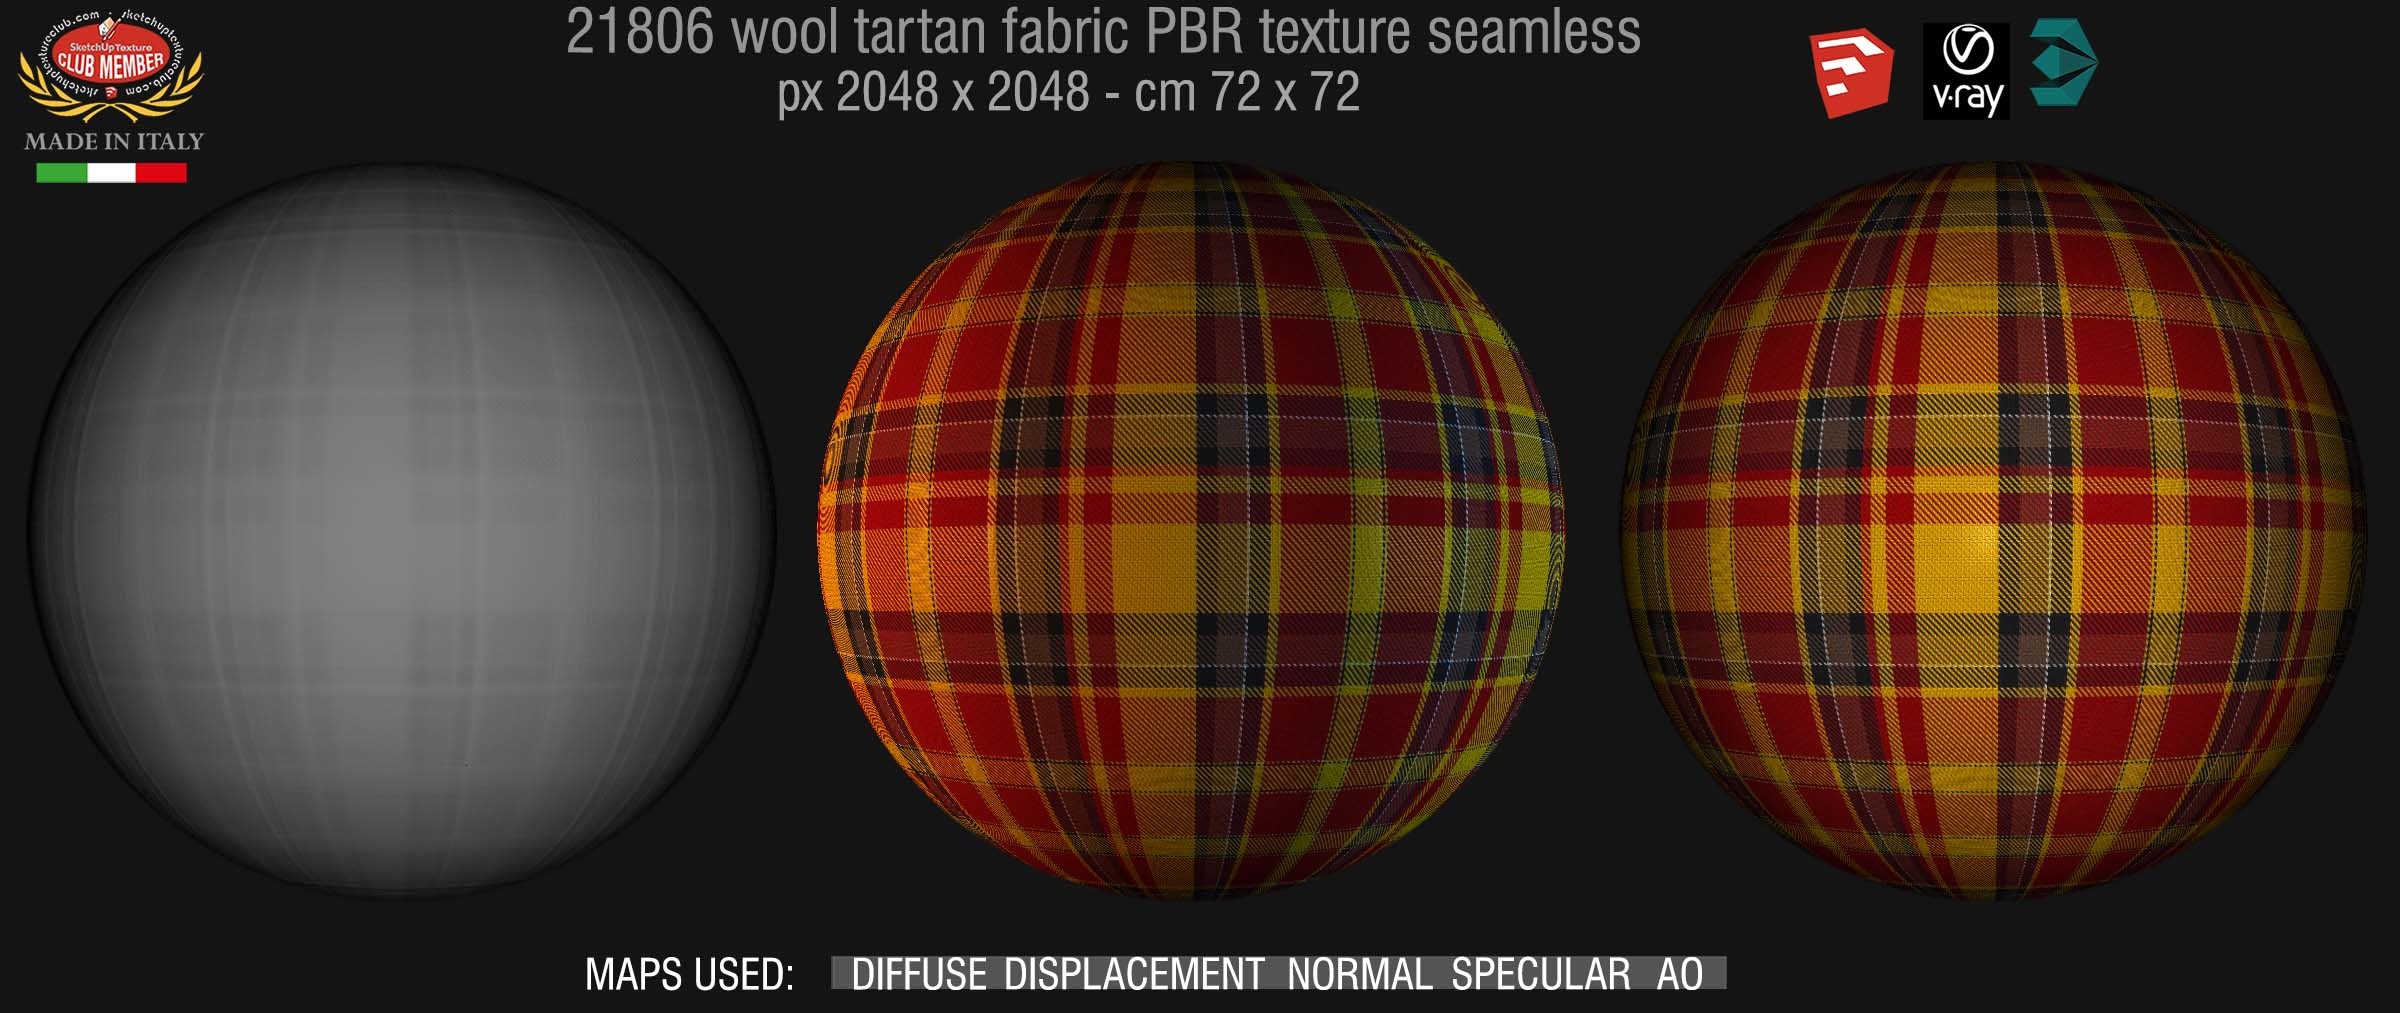 21806 wool tartan fabric PBR texture seamless DEMO